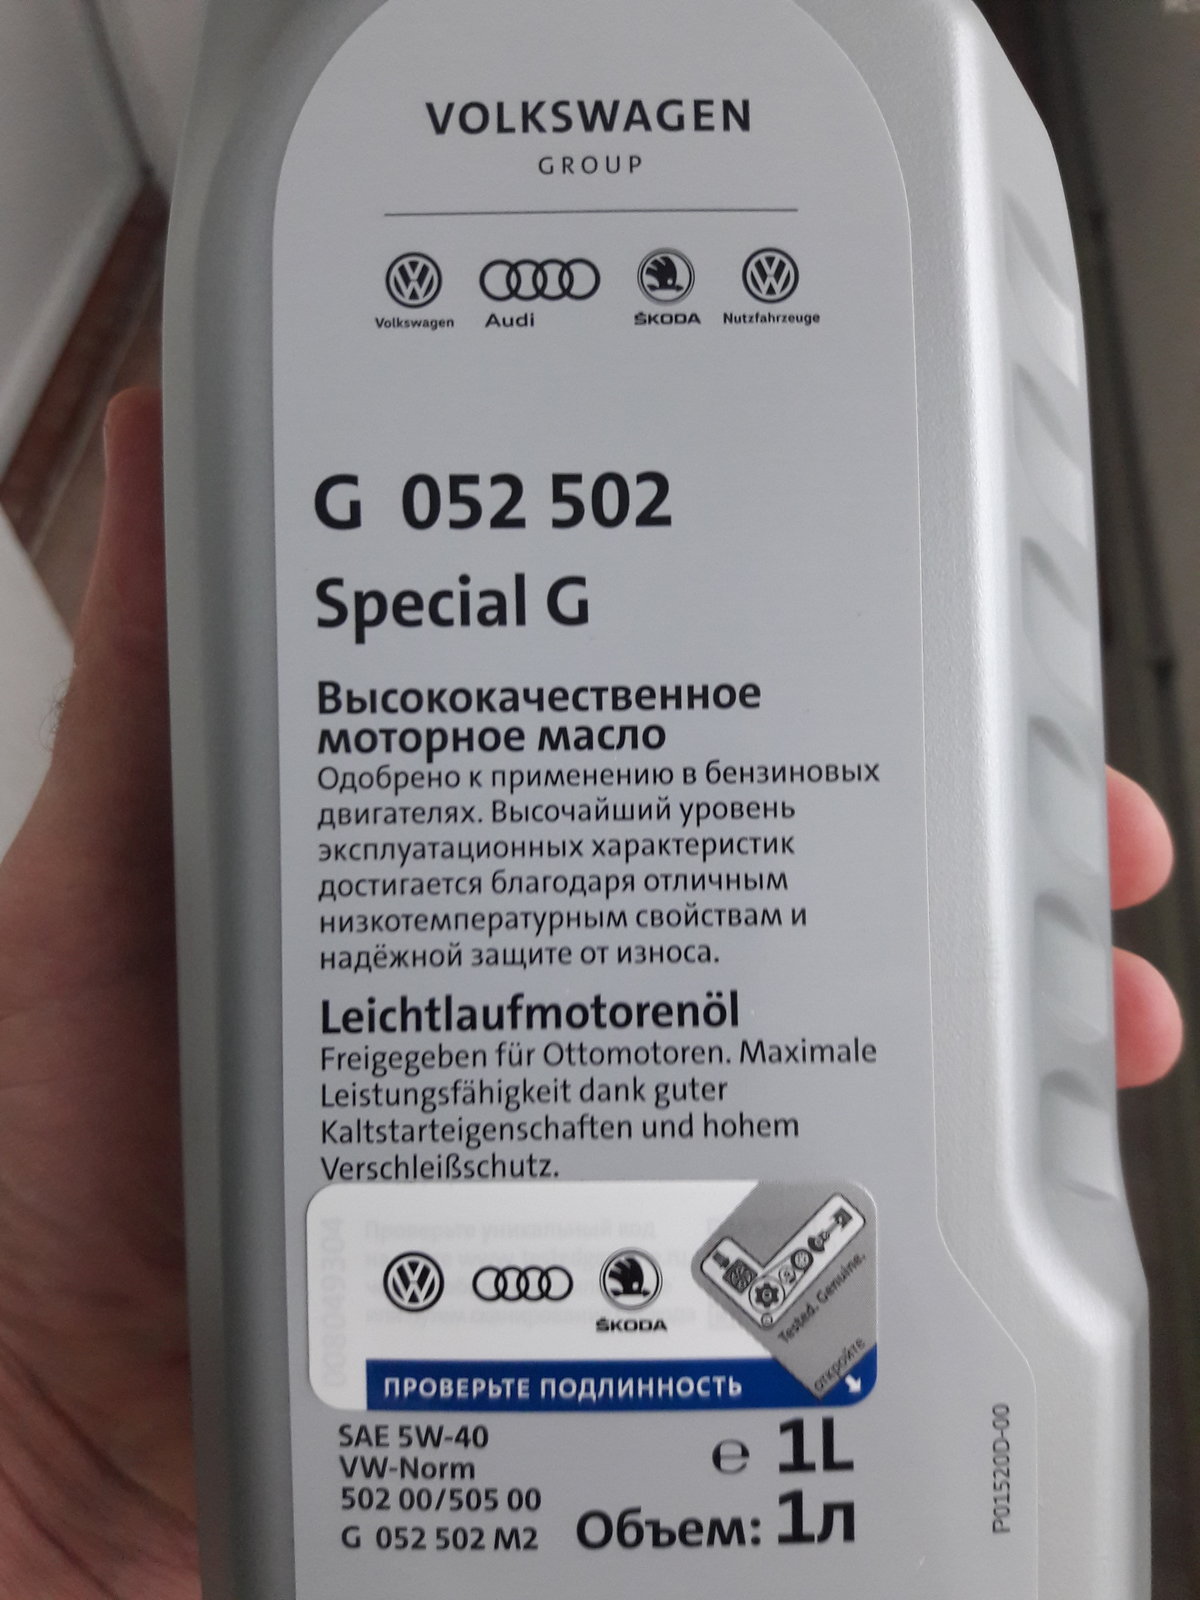 Допуск моторного масла vw. Одобрено VW 502/505. 502/505 General. VW 502/505 рас расшифровка. Допуск Volkswagen 505 год.